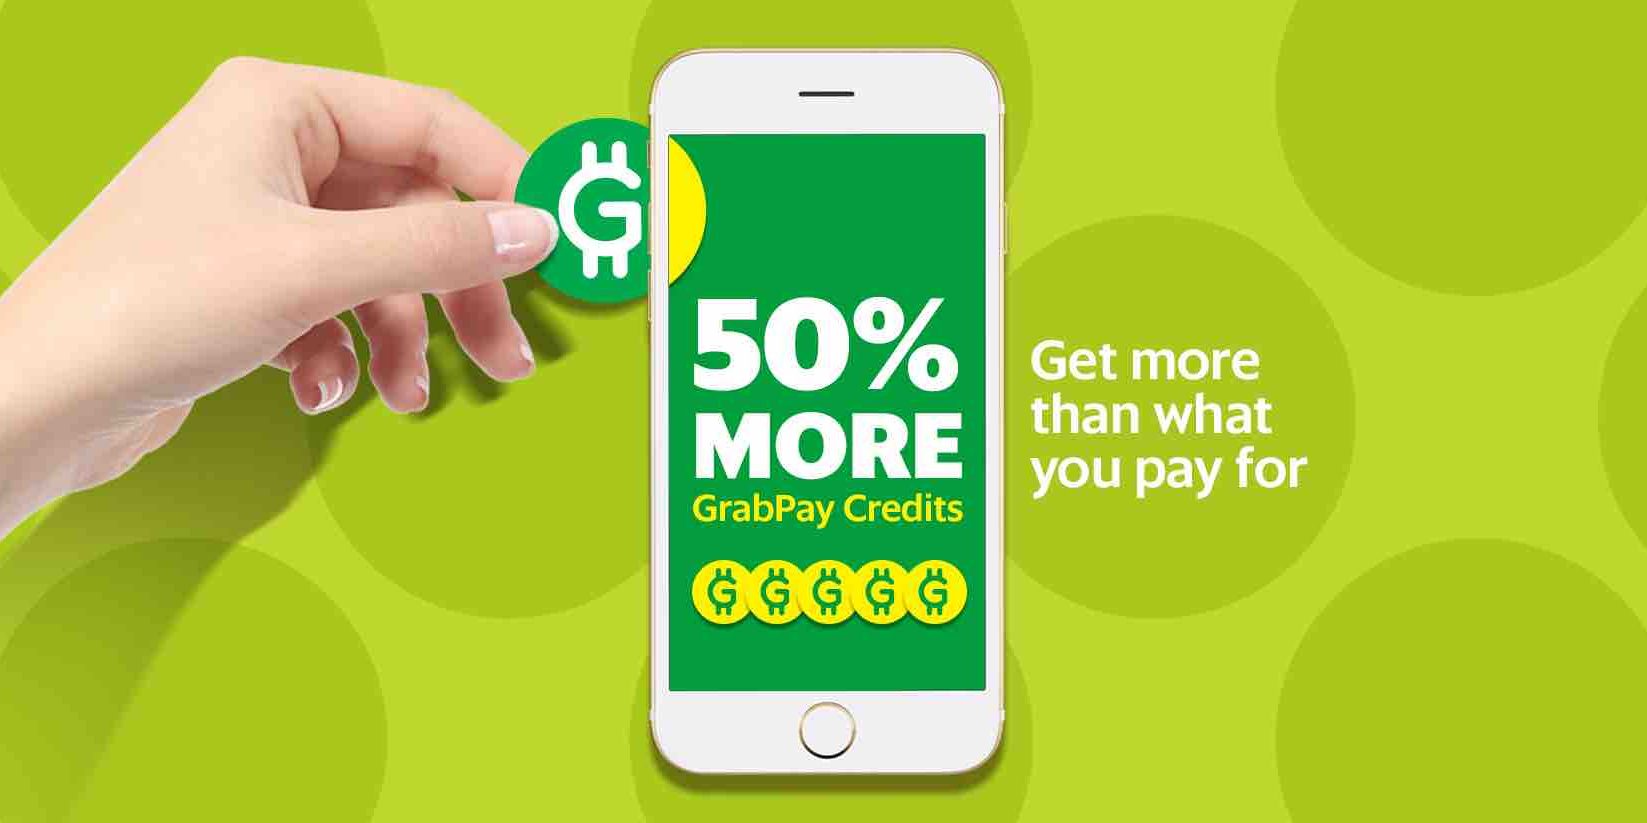 Grab Singapore Top-up GrabPay Credits & Get 50% More Promotion 19-26 May 2017